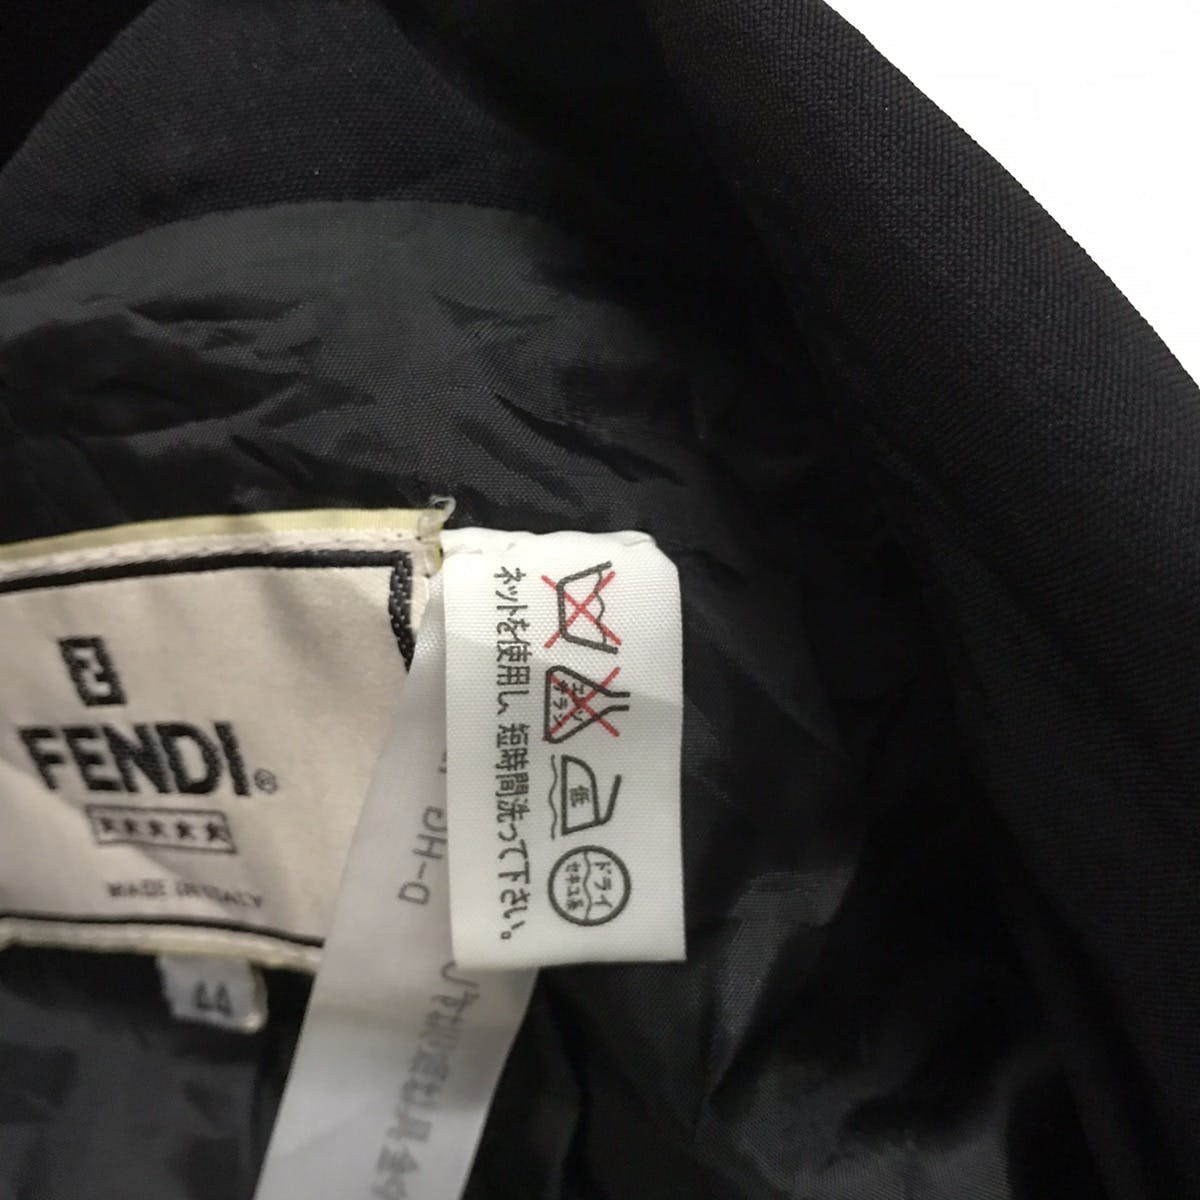 Fendi Women Coat Jacket Made in Italy - 20